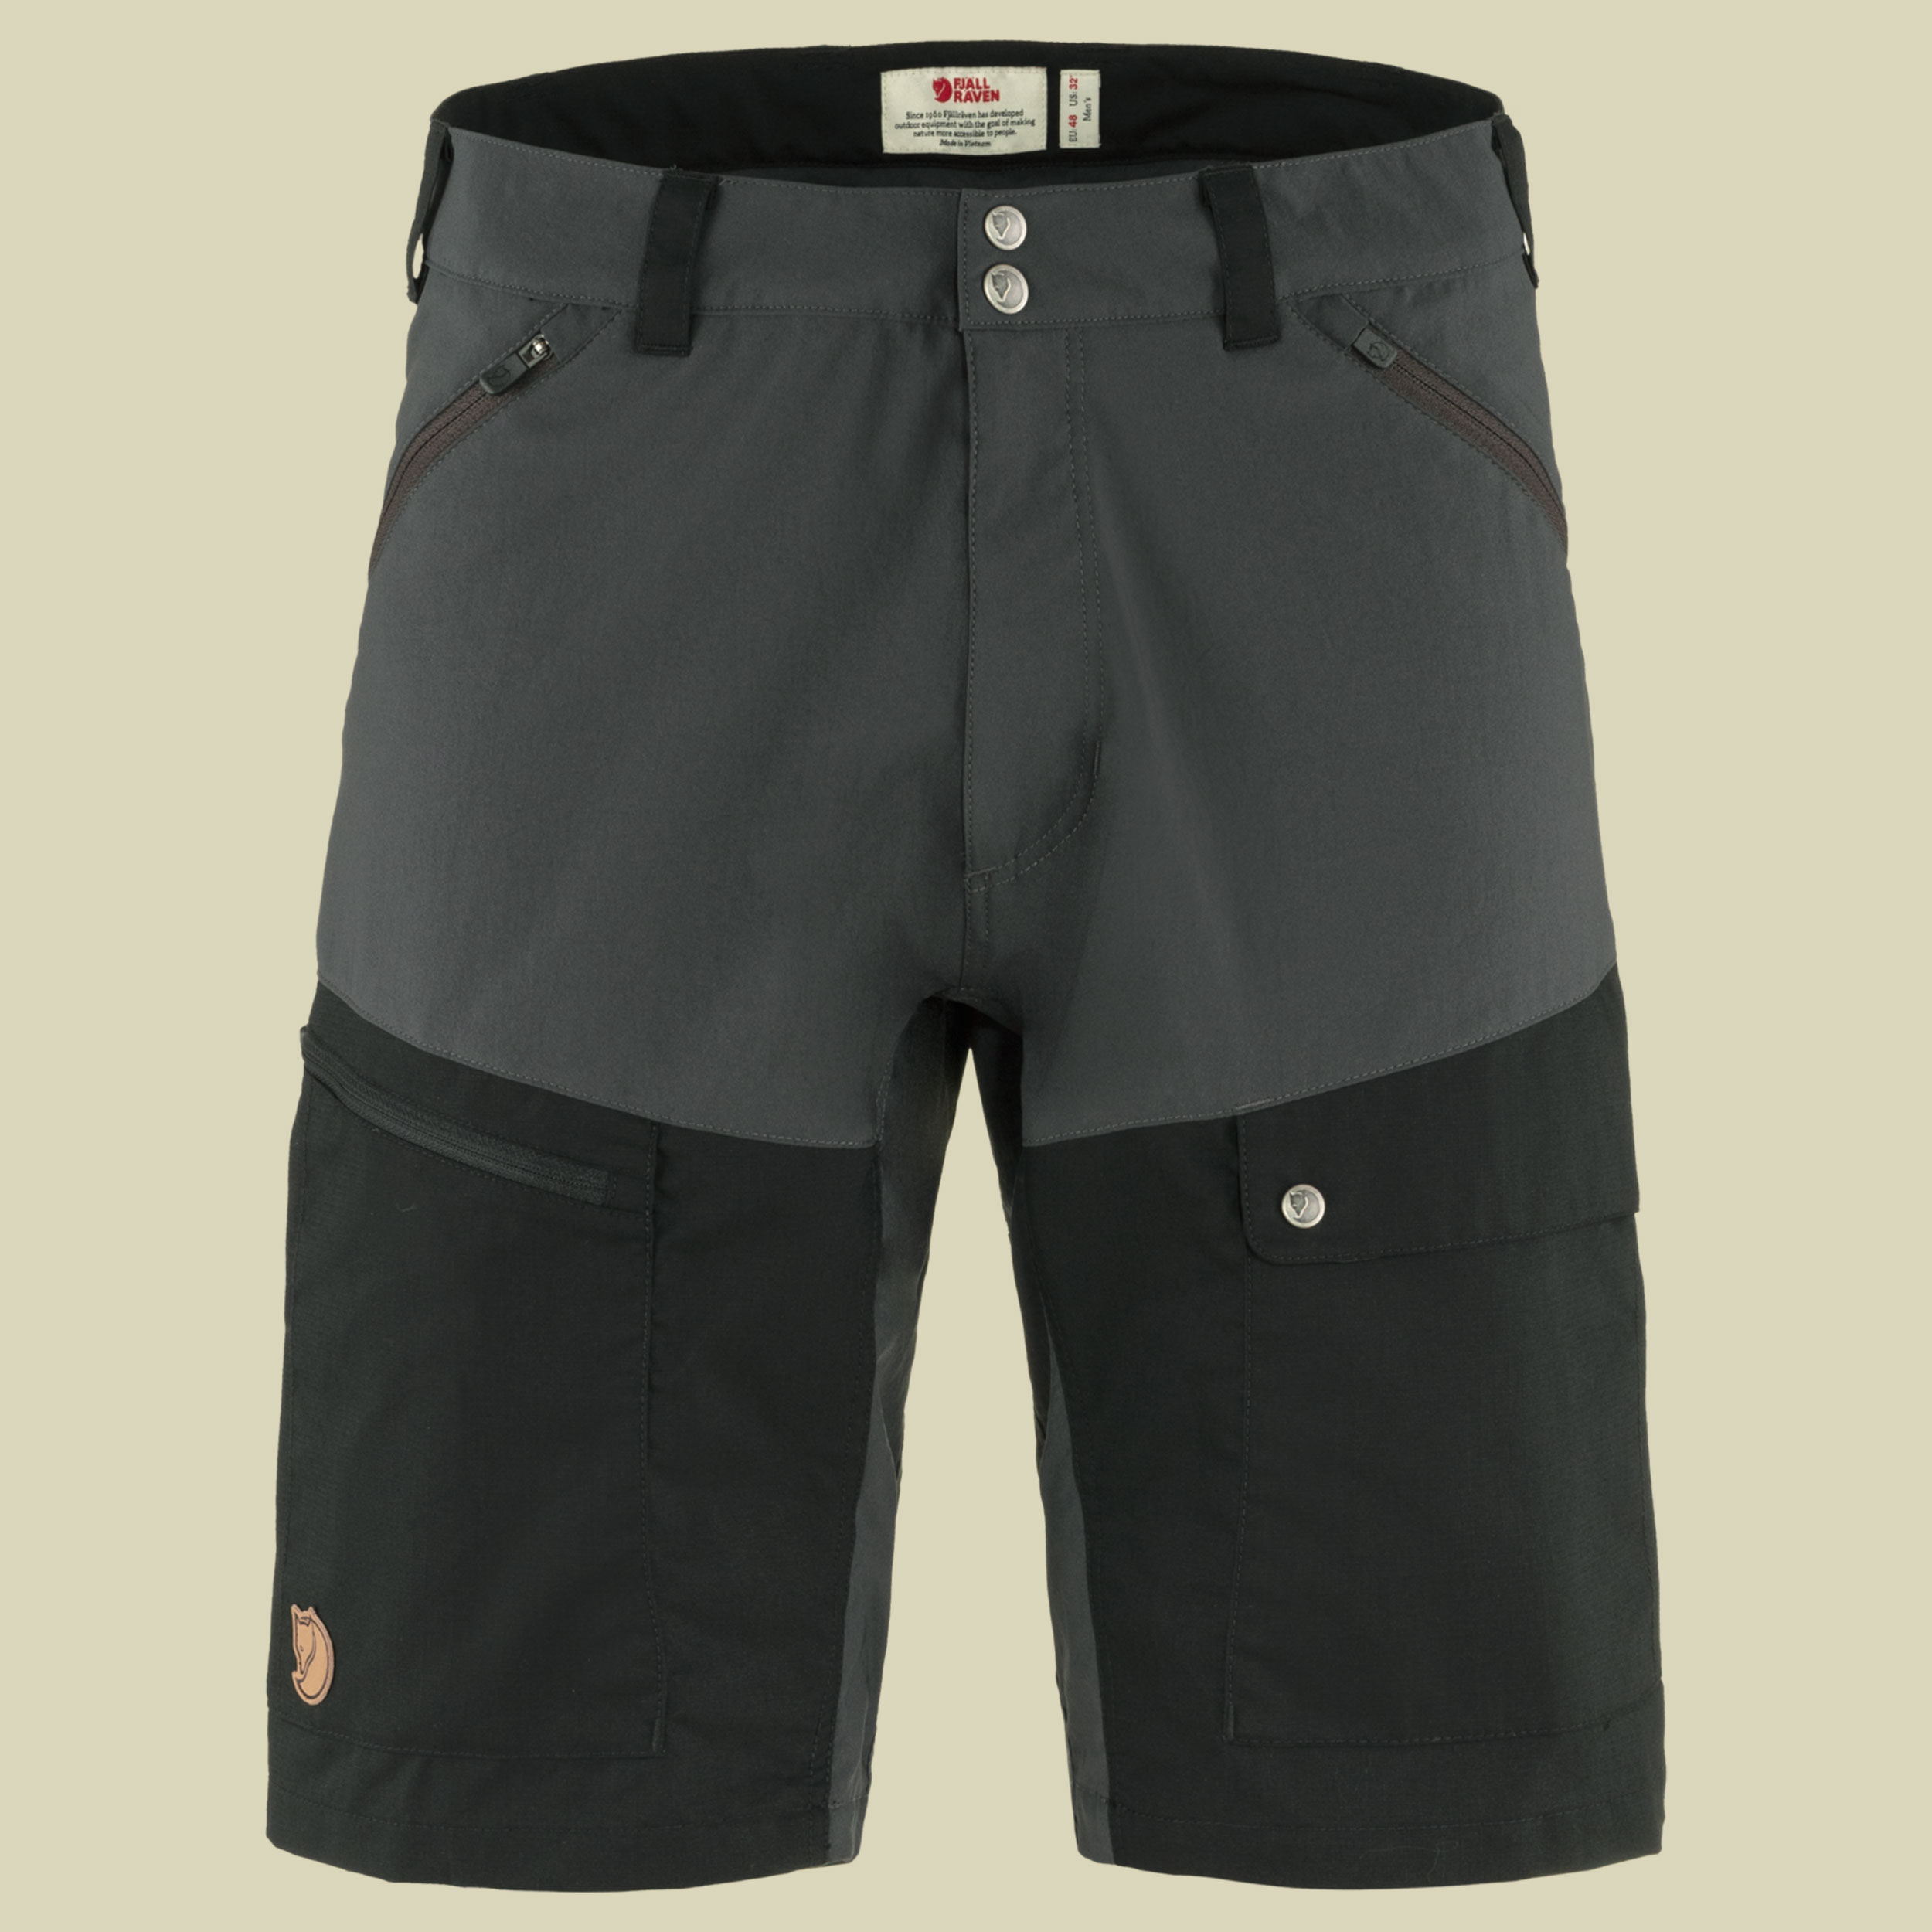 Abisko Midsummer Shorts Men Größe 54 Farbe dark grey/black